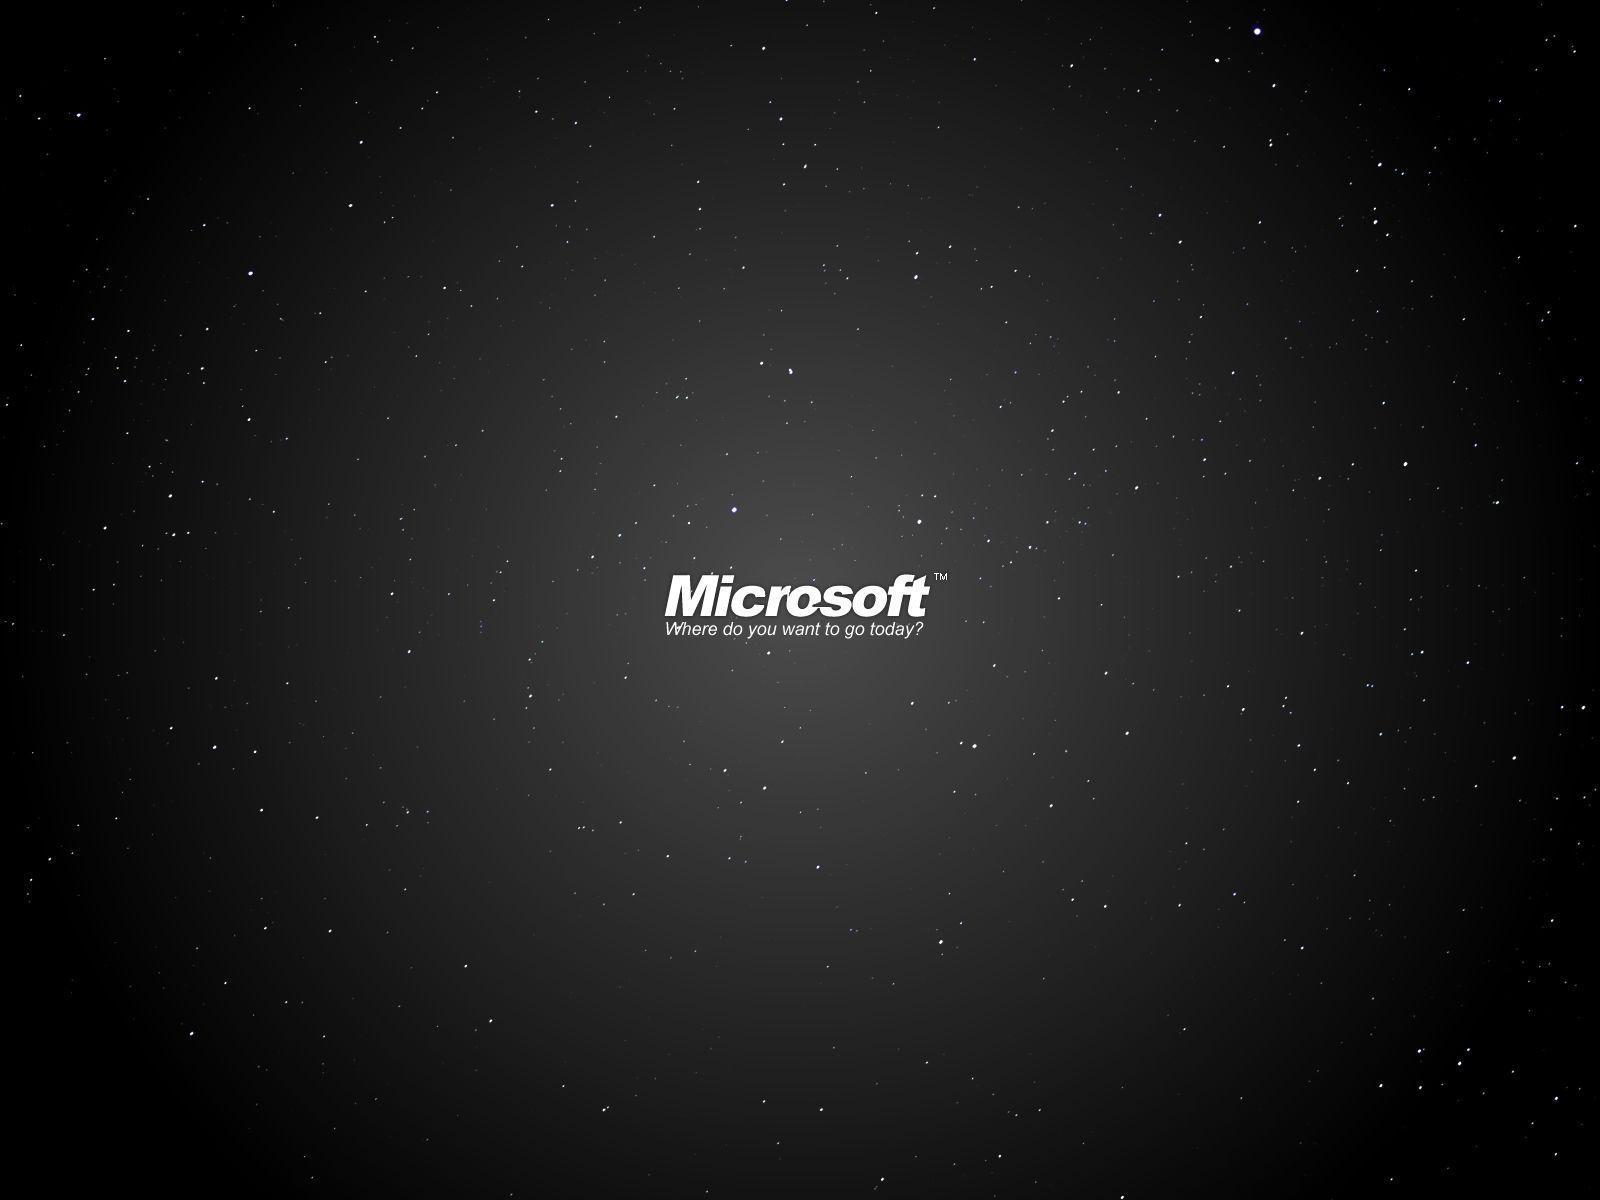 Microsoft Wallpaper Image 9973 HD Picture. Best Desktop